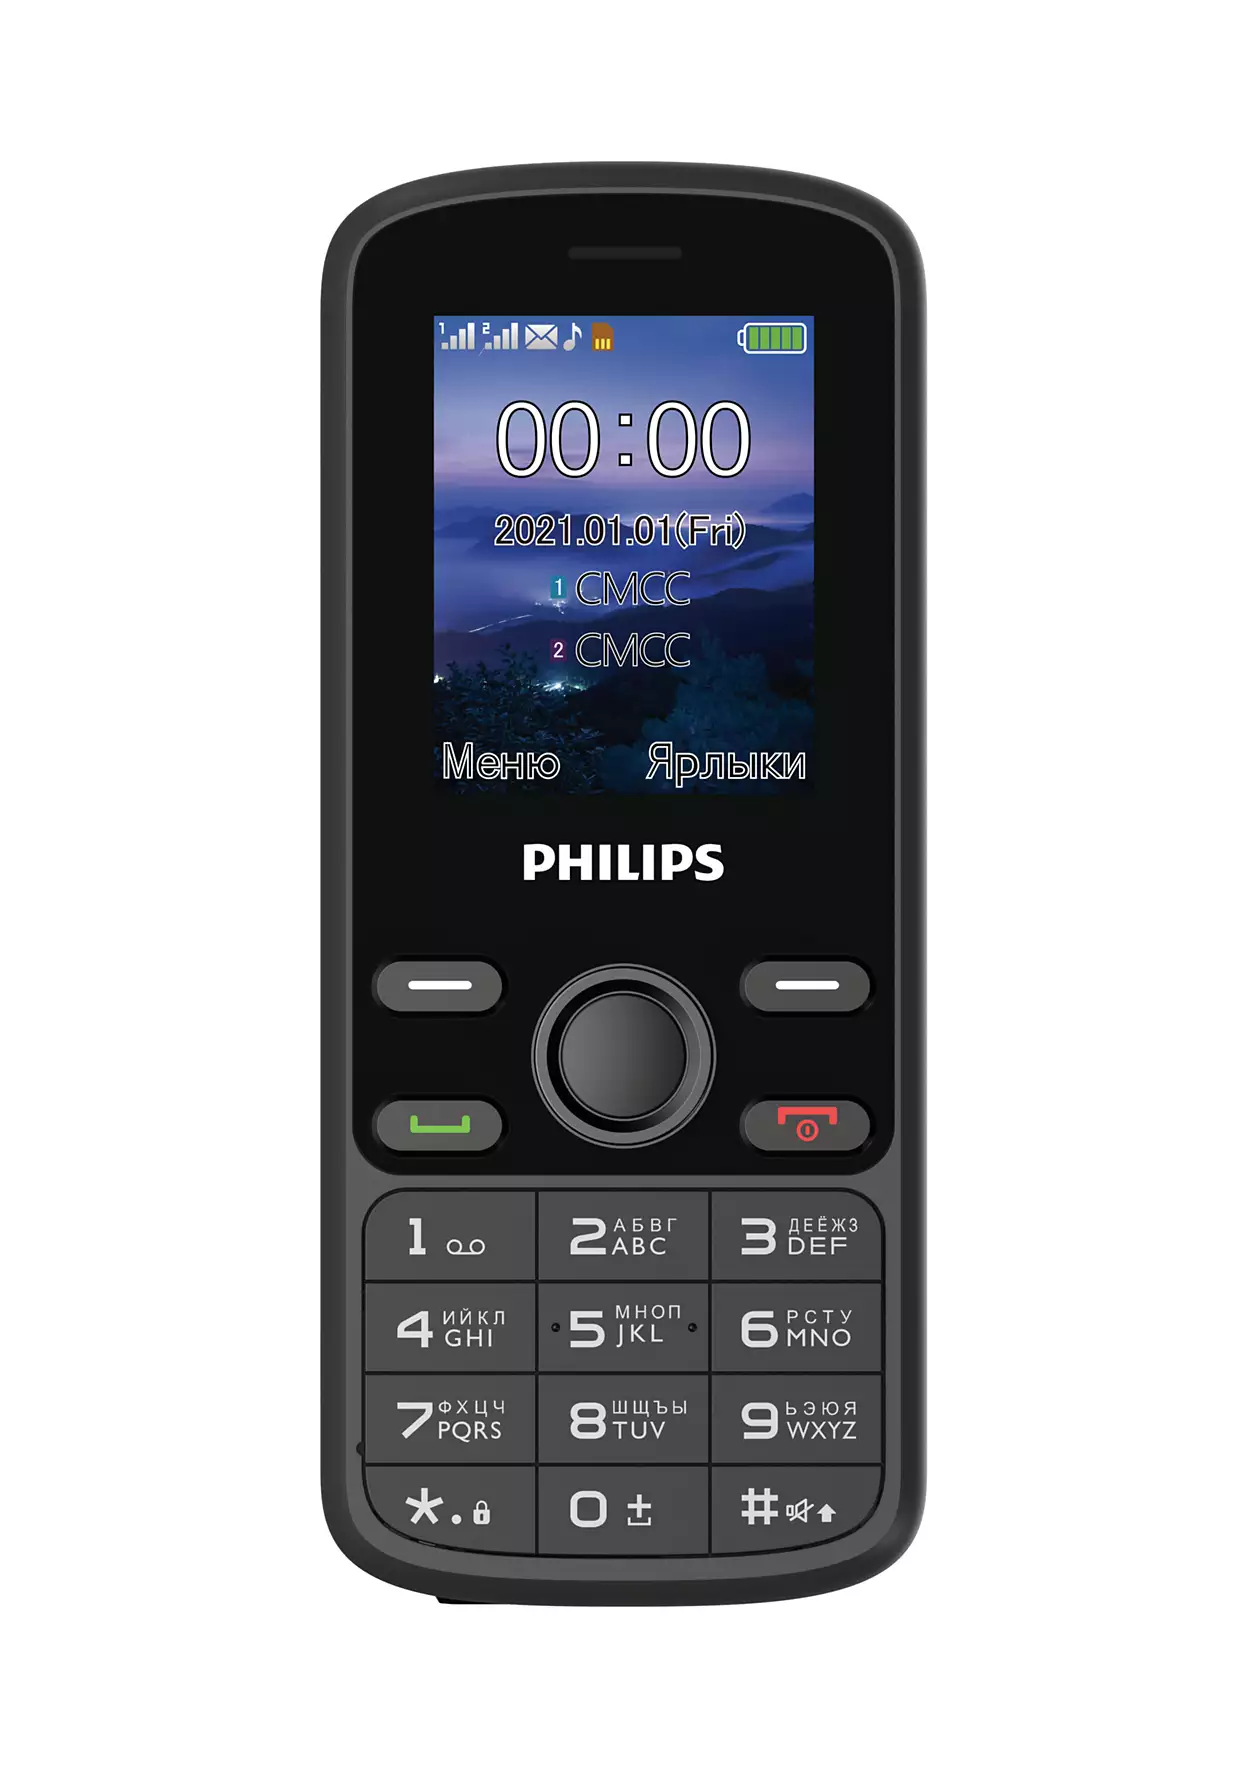 Philips xenium синий. Philips Xenium e111. Philips Xenium e111 Black. Сотовый телефон Philips Xenium e111. Мобильный телефон Philips Xenium e111 Black.